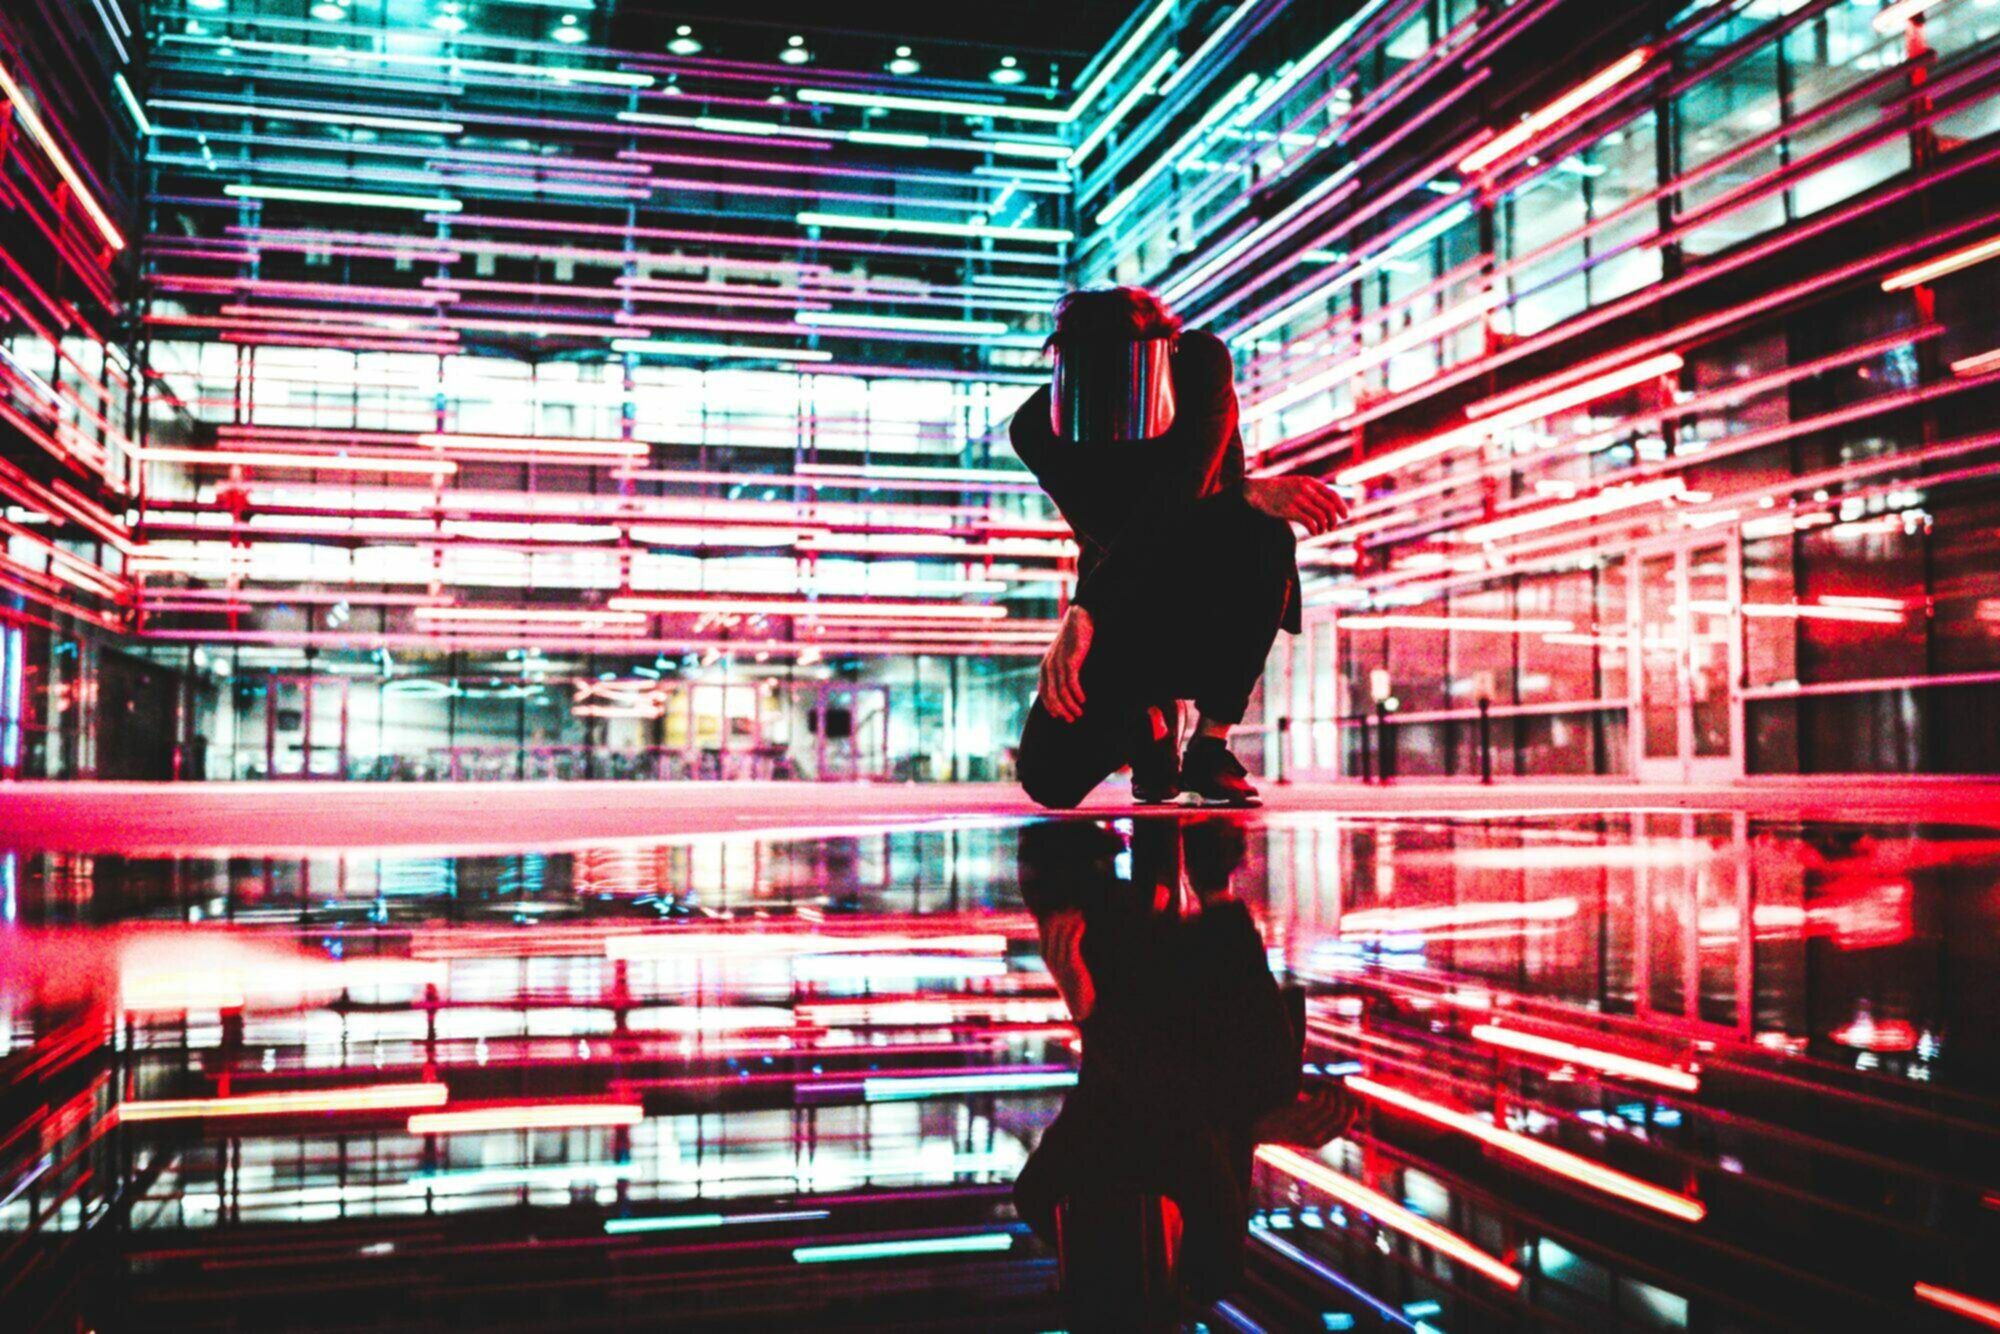 Man kneeling down in light filled futuristic room